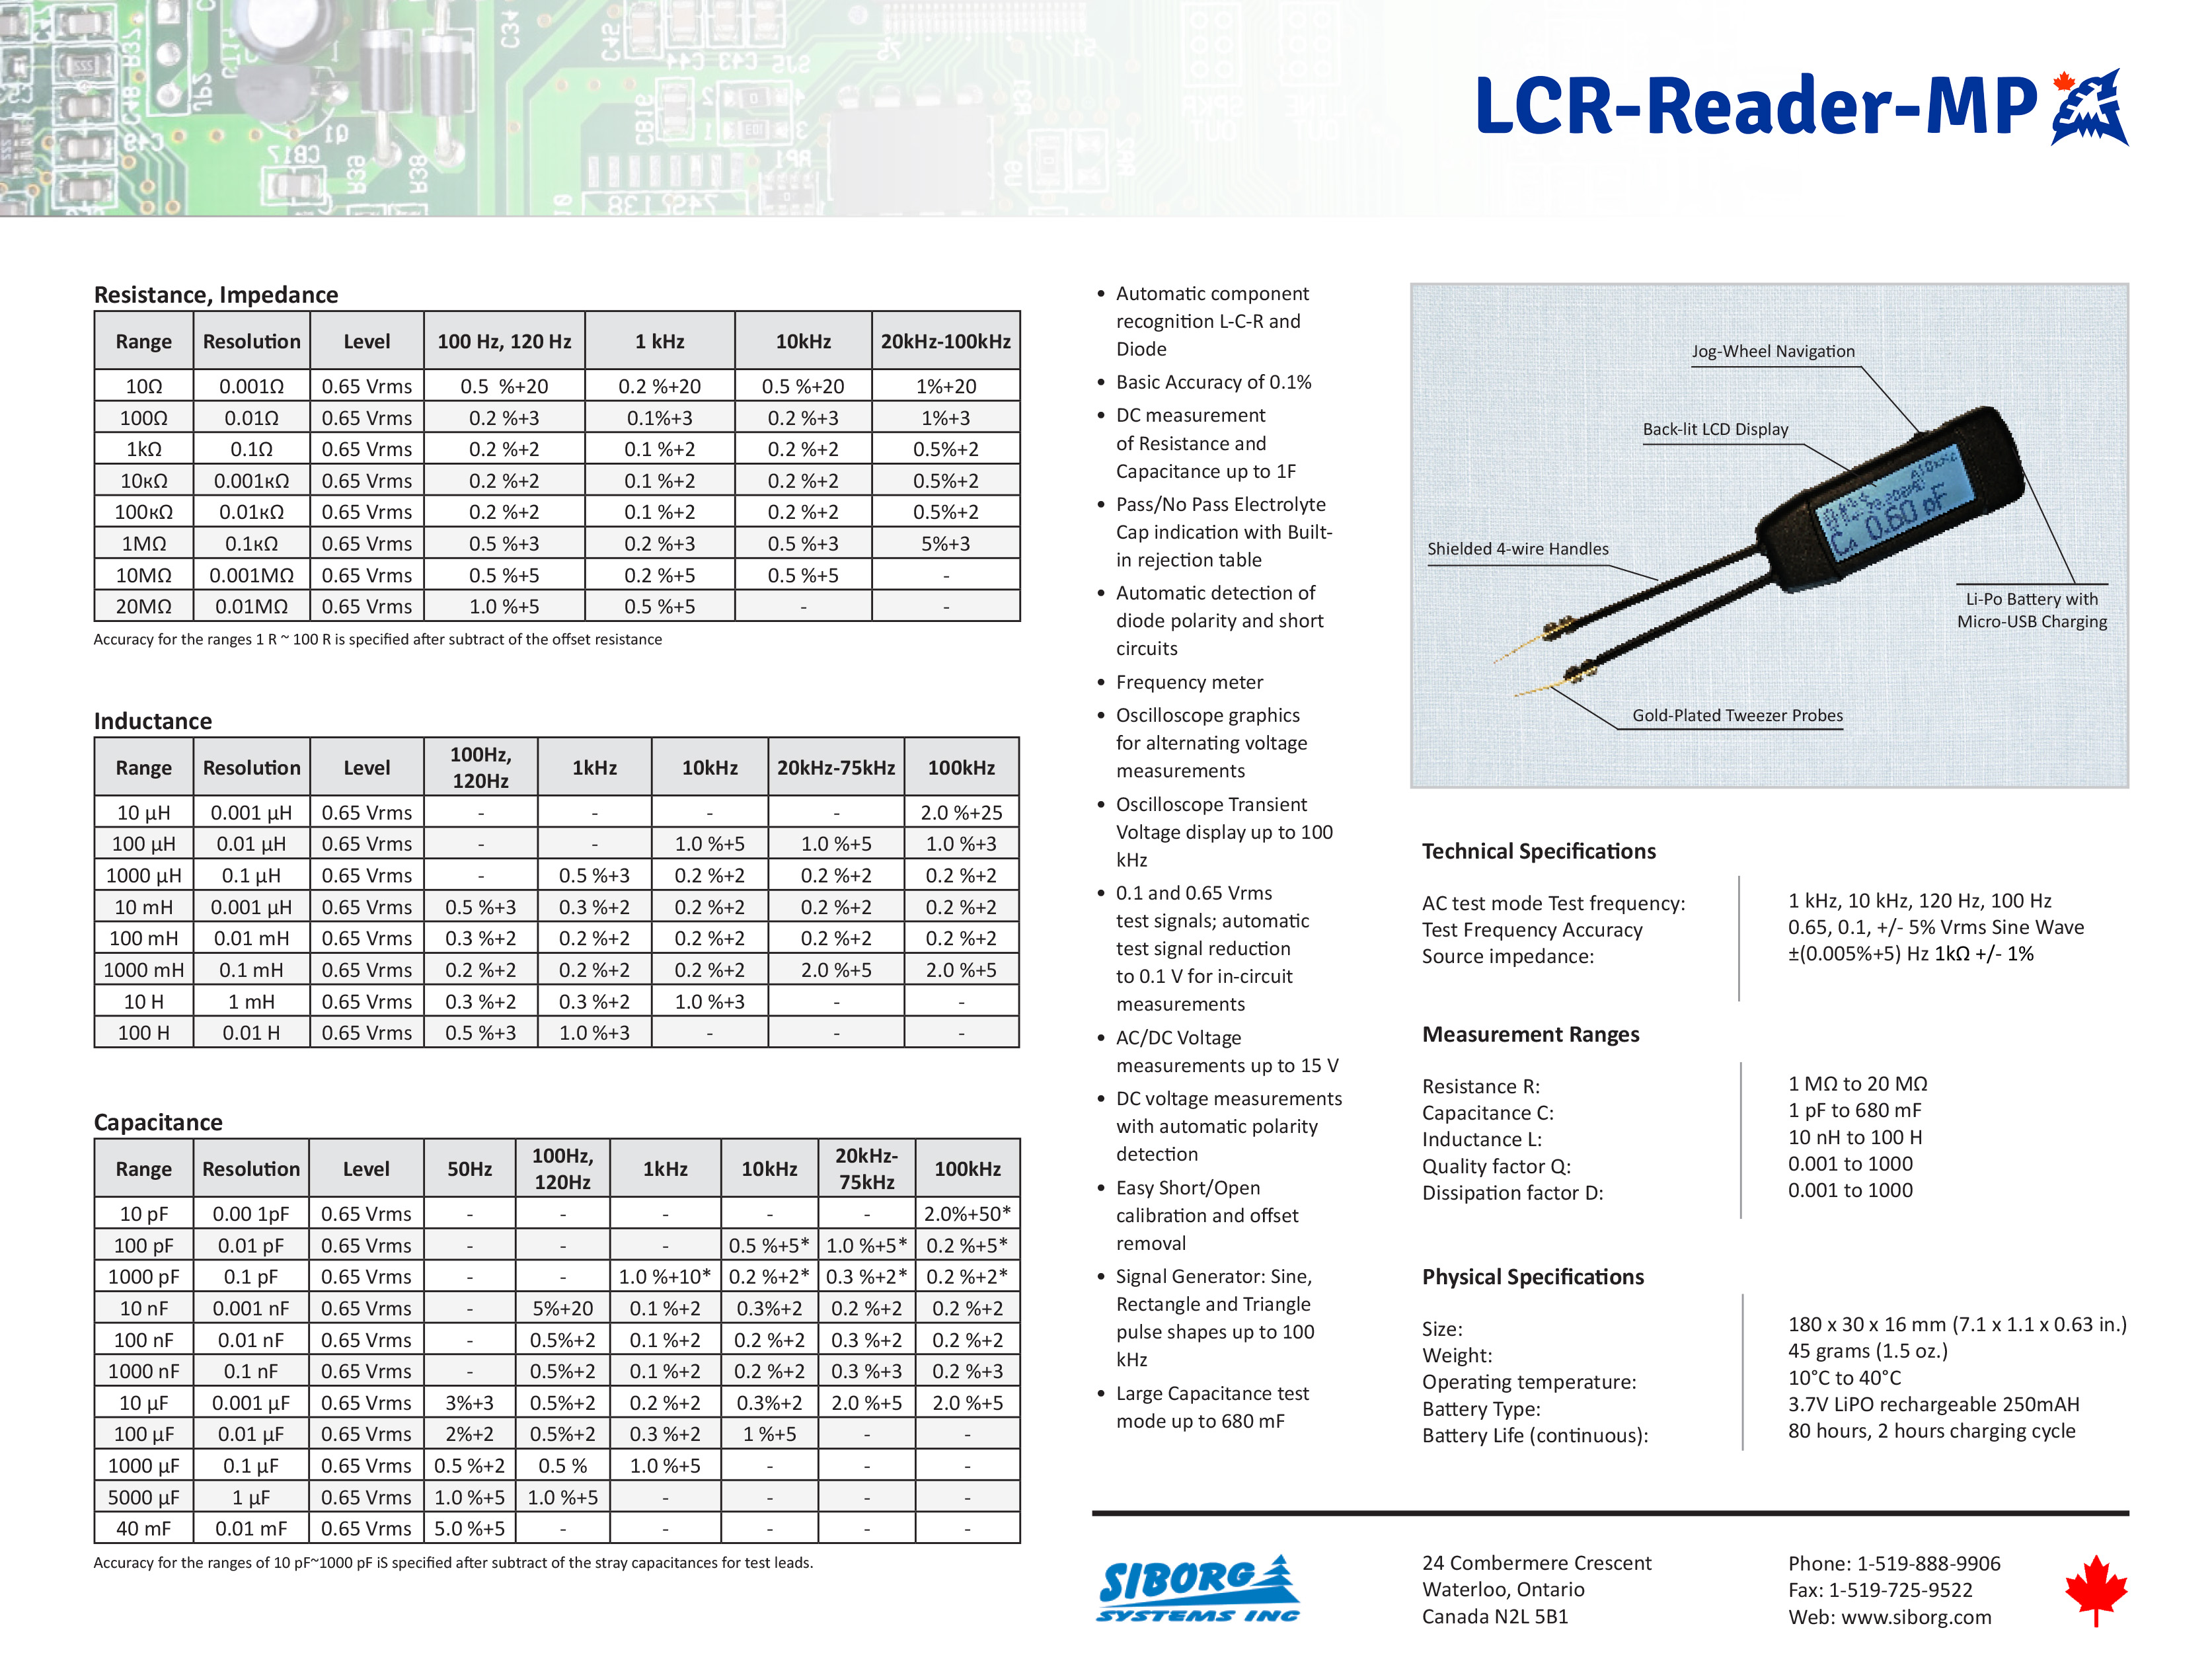 LCR-Reader-MP Informational flier